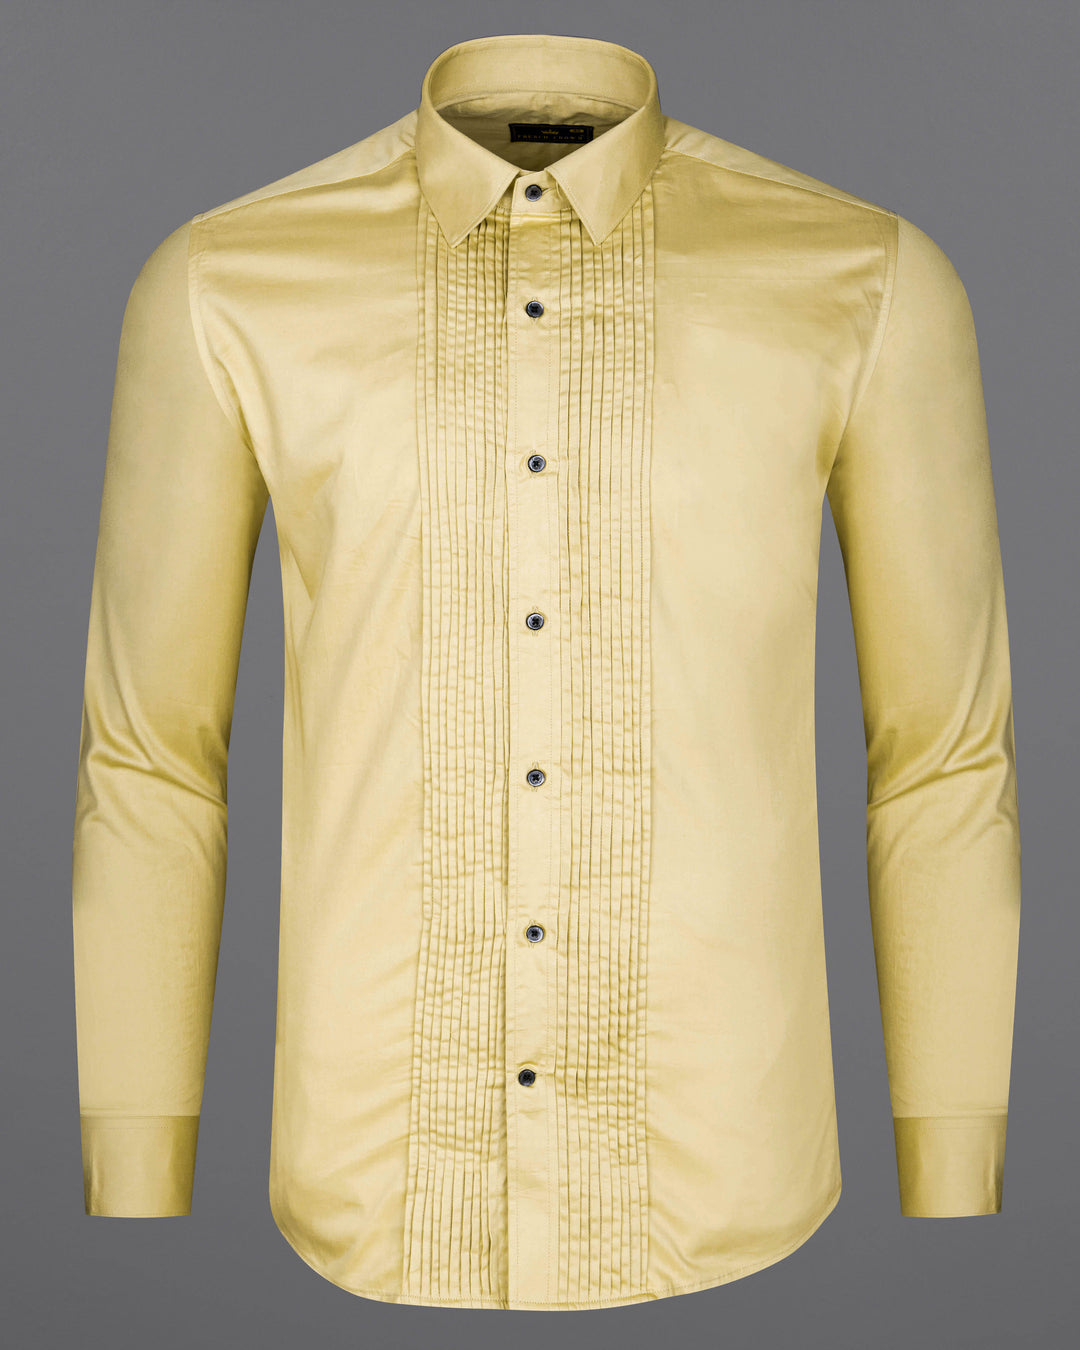 Golden Glow: Yellow Shirt Matching Pant Ideas For Men